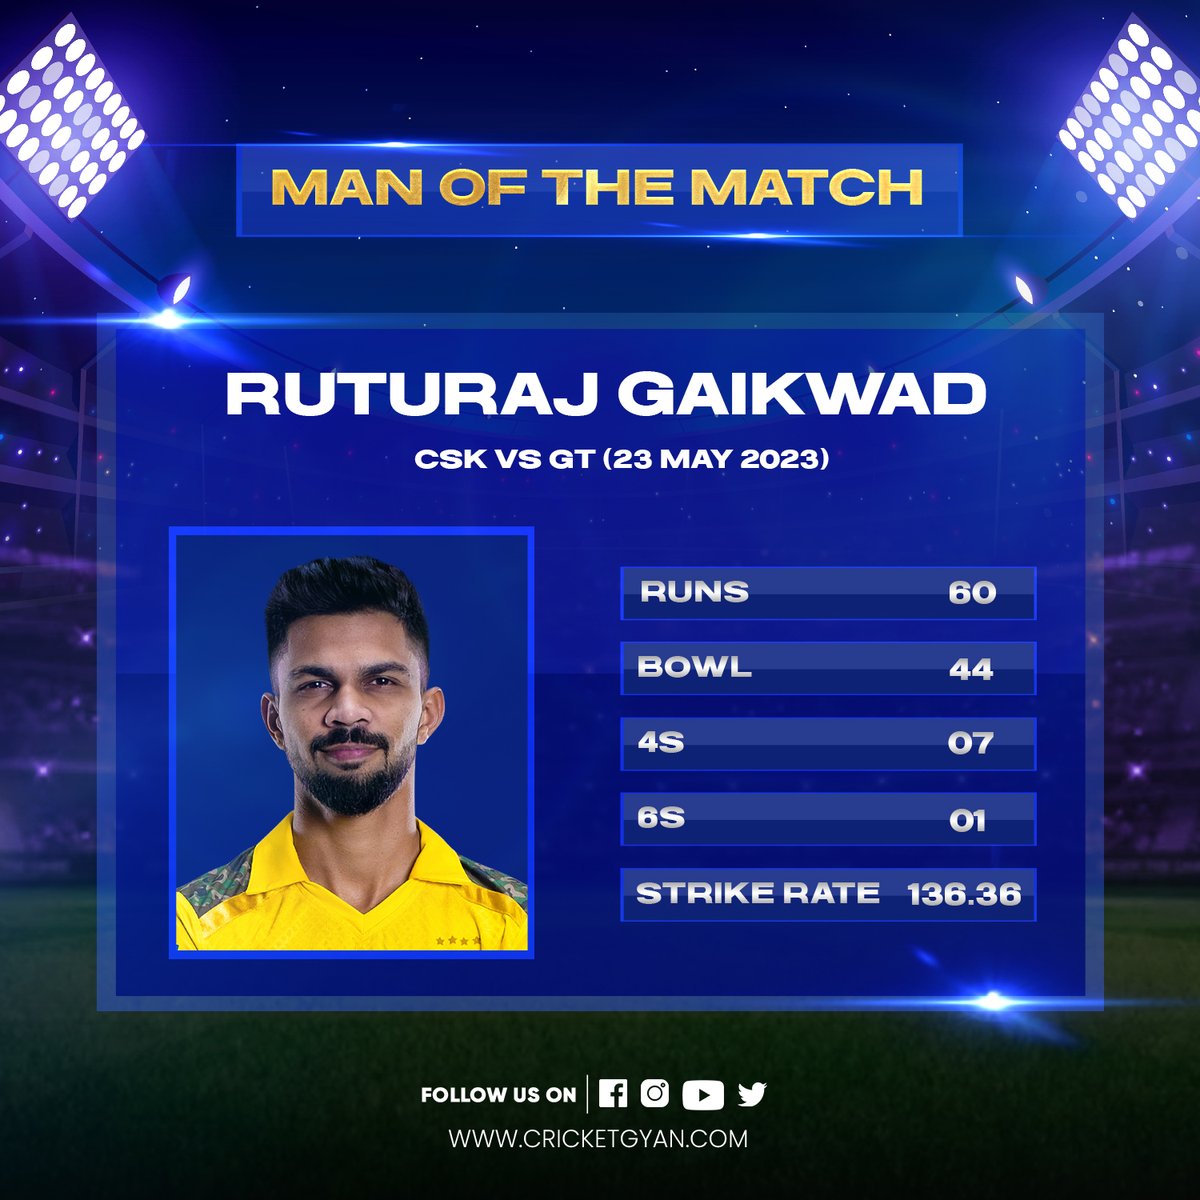 Congratulations Ruturaj Gaikwad for winning Man of the match. He scored 60 runs in slow pitch and helps CSK to get into finals. . #ruturajgaikwad #chennaisuperkings #csk #cskvsgt #gujarattitans #ipl2023 #iplfinal #cricketgyan